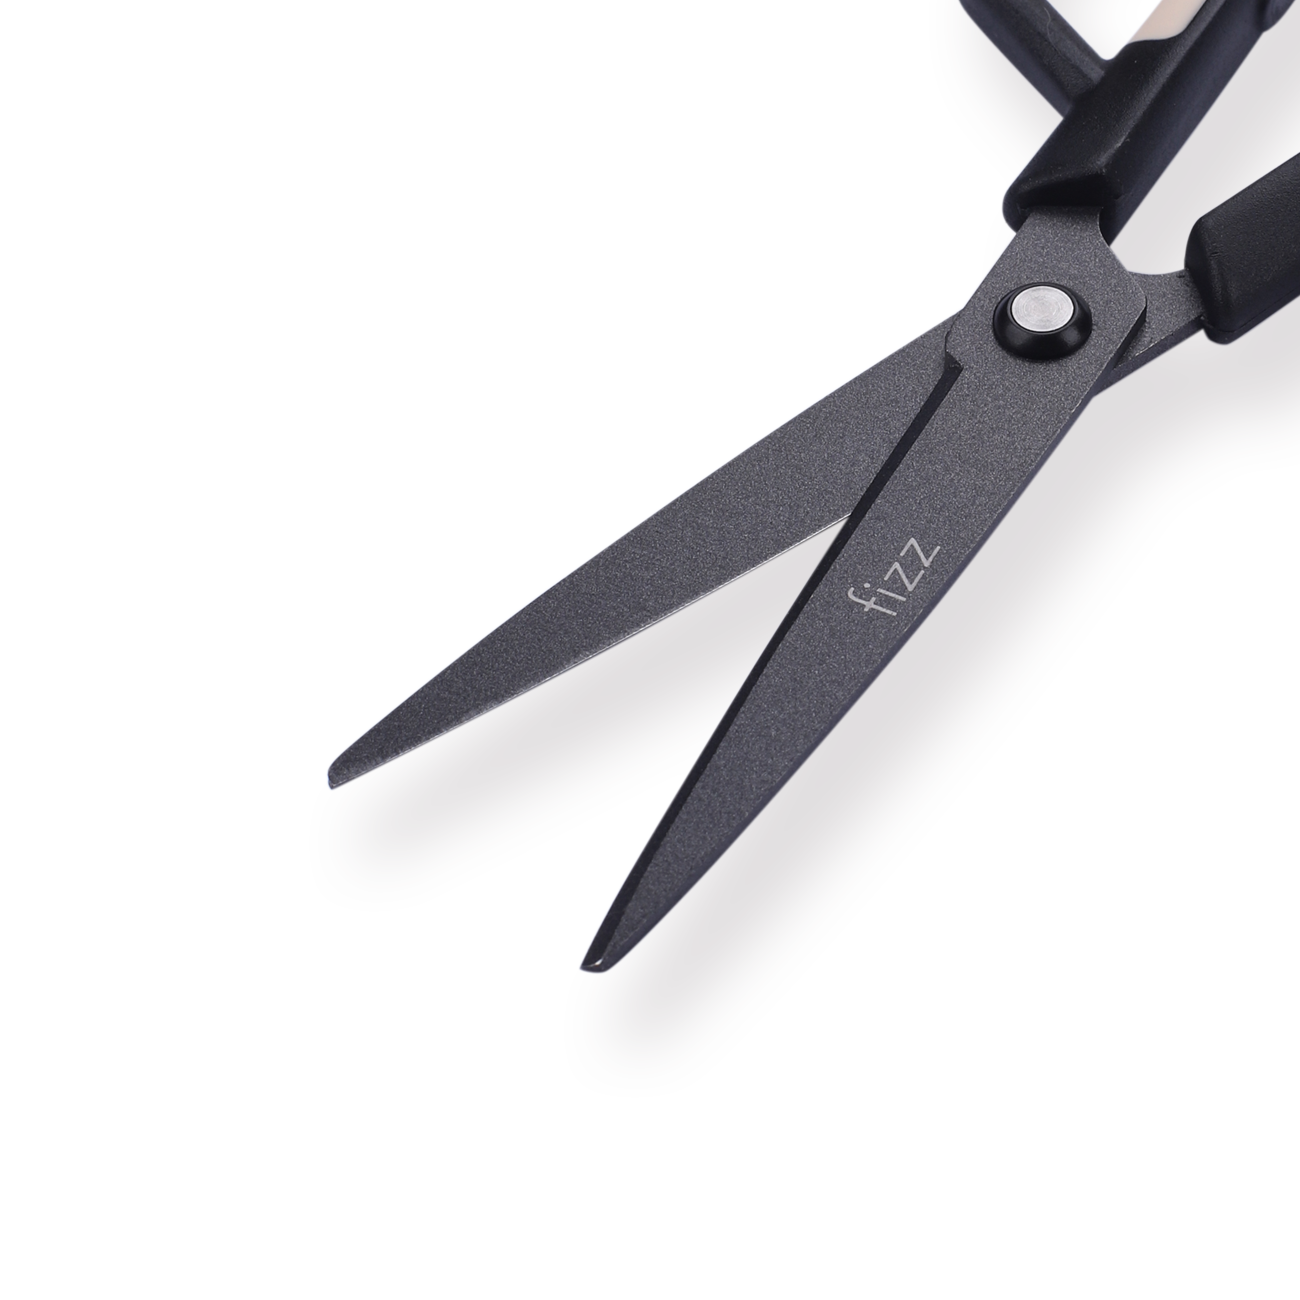 Multi-Purpose Mini Scissors Portable Functional Scissors Stainless Steel Detail Craft Scissors Hand Scissors for Art Crafts Projects(Pink)